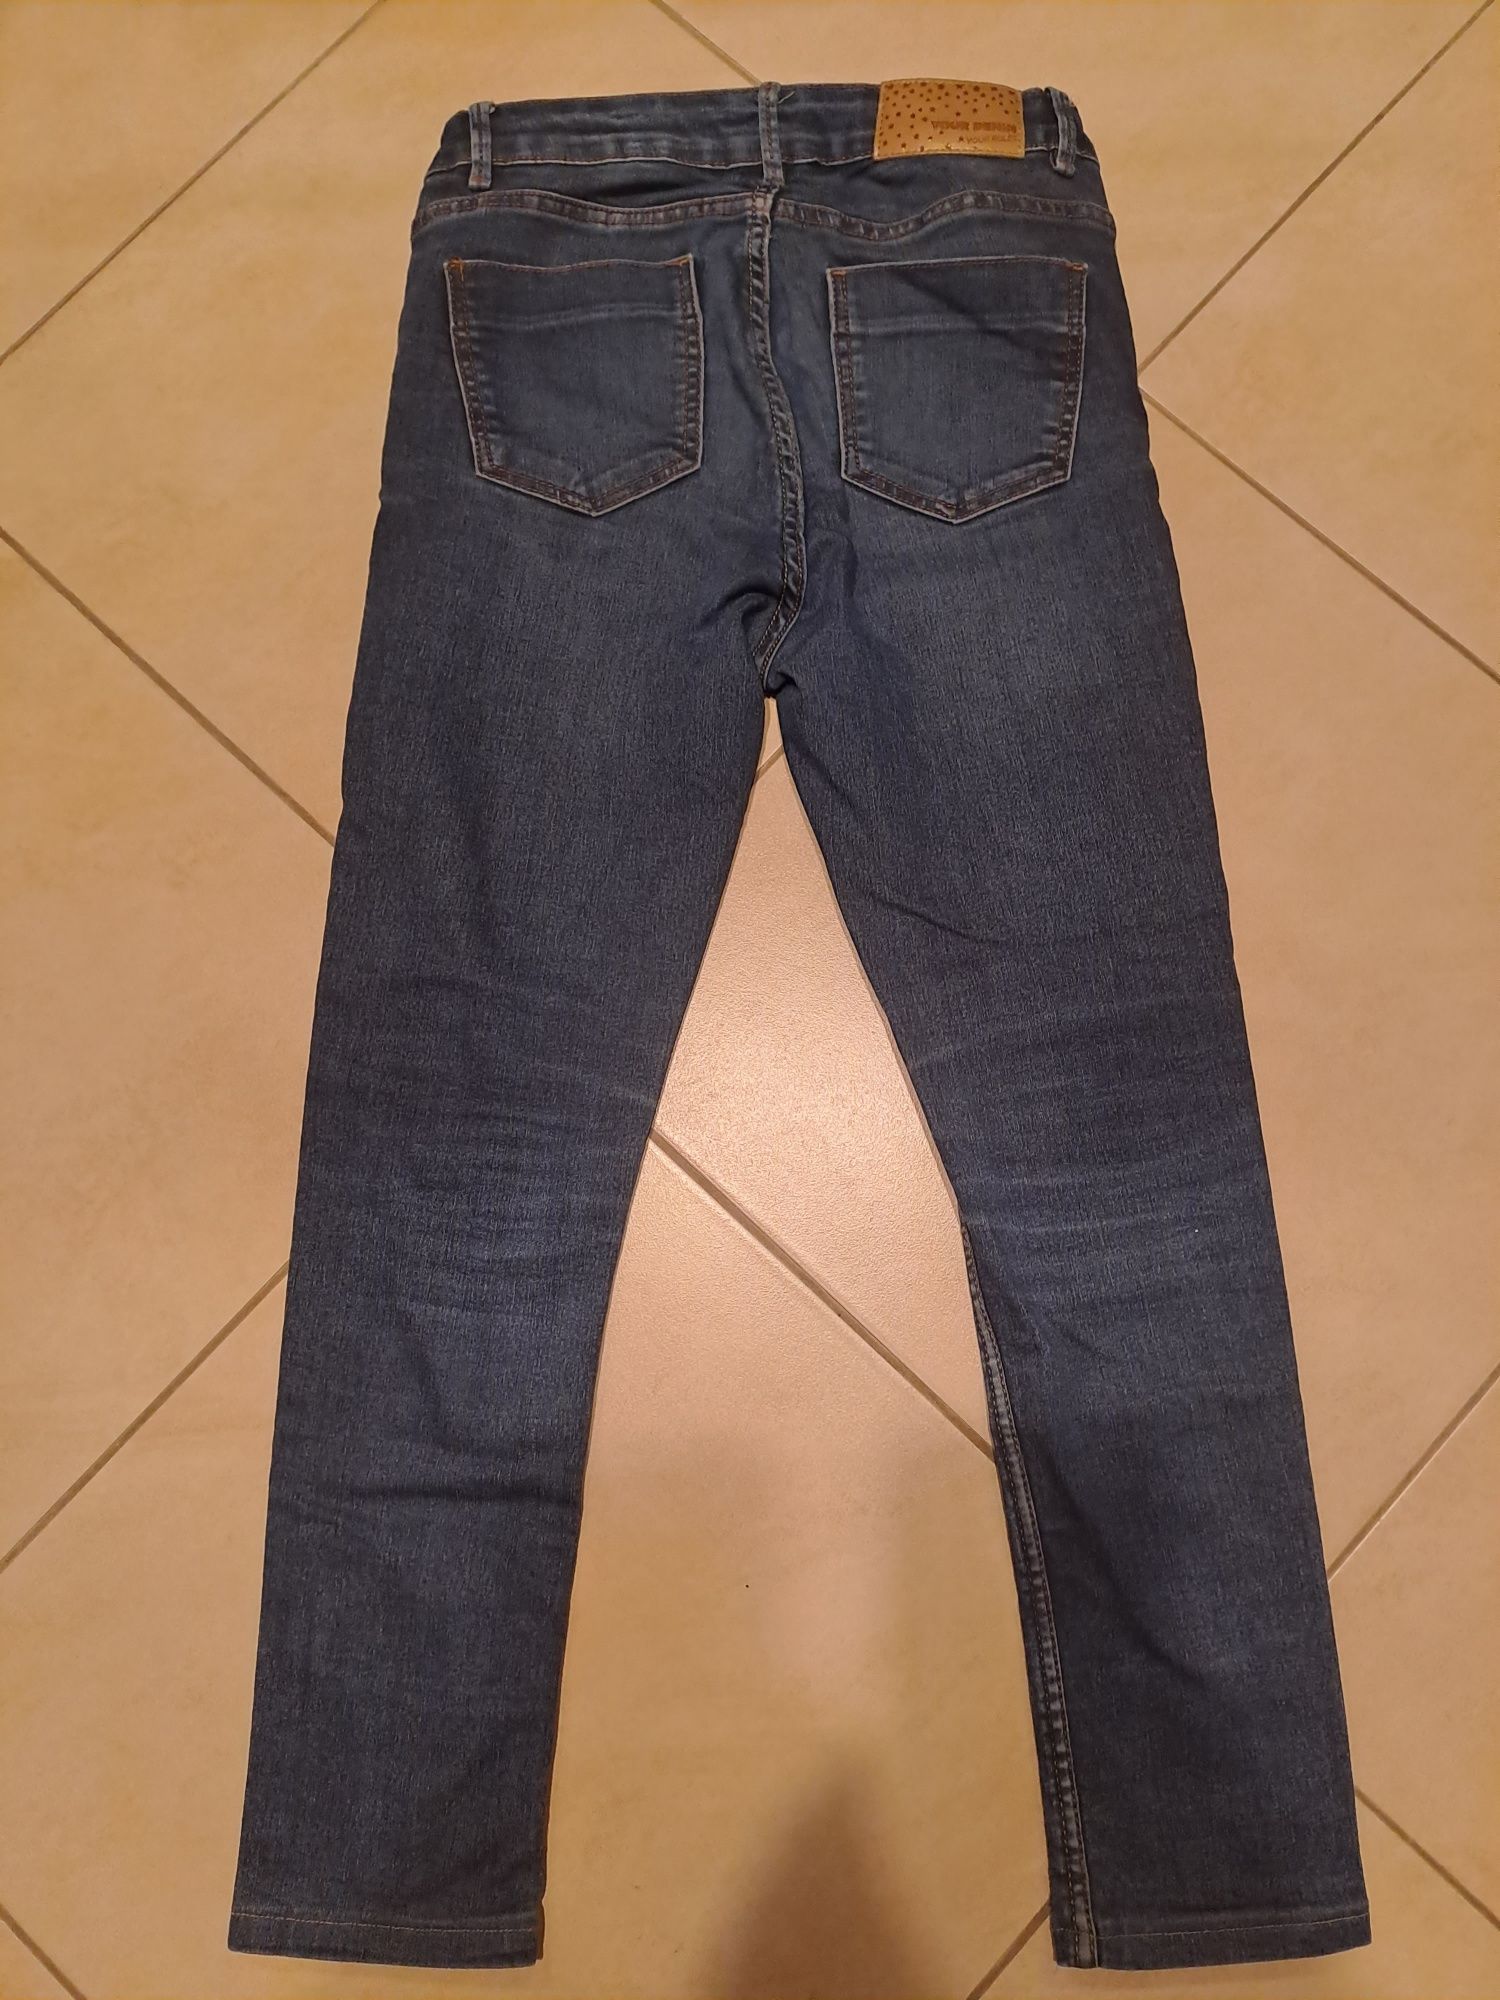 Spodnie jeansy Cubus rozmiar 152